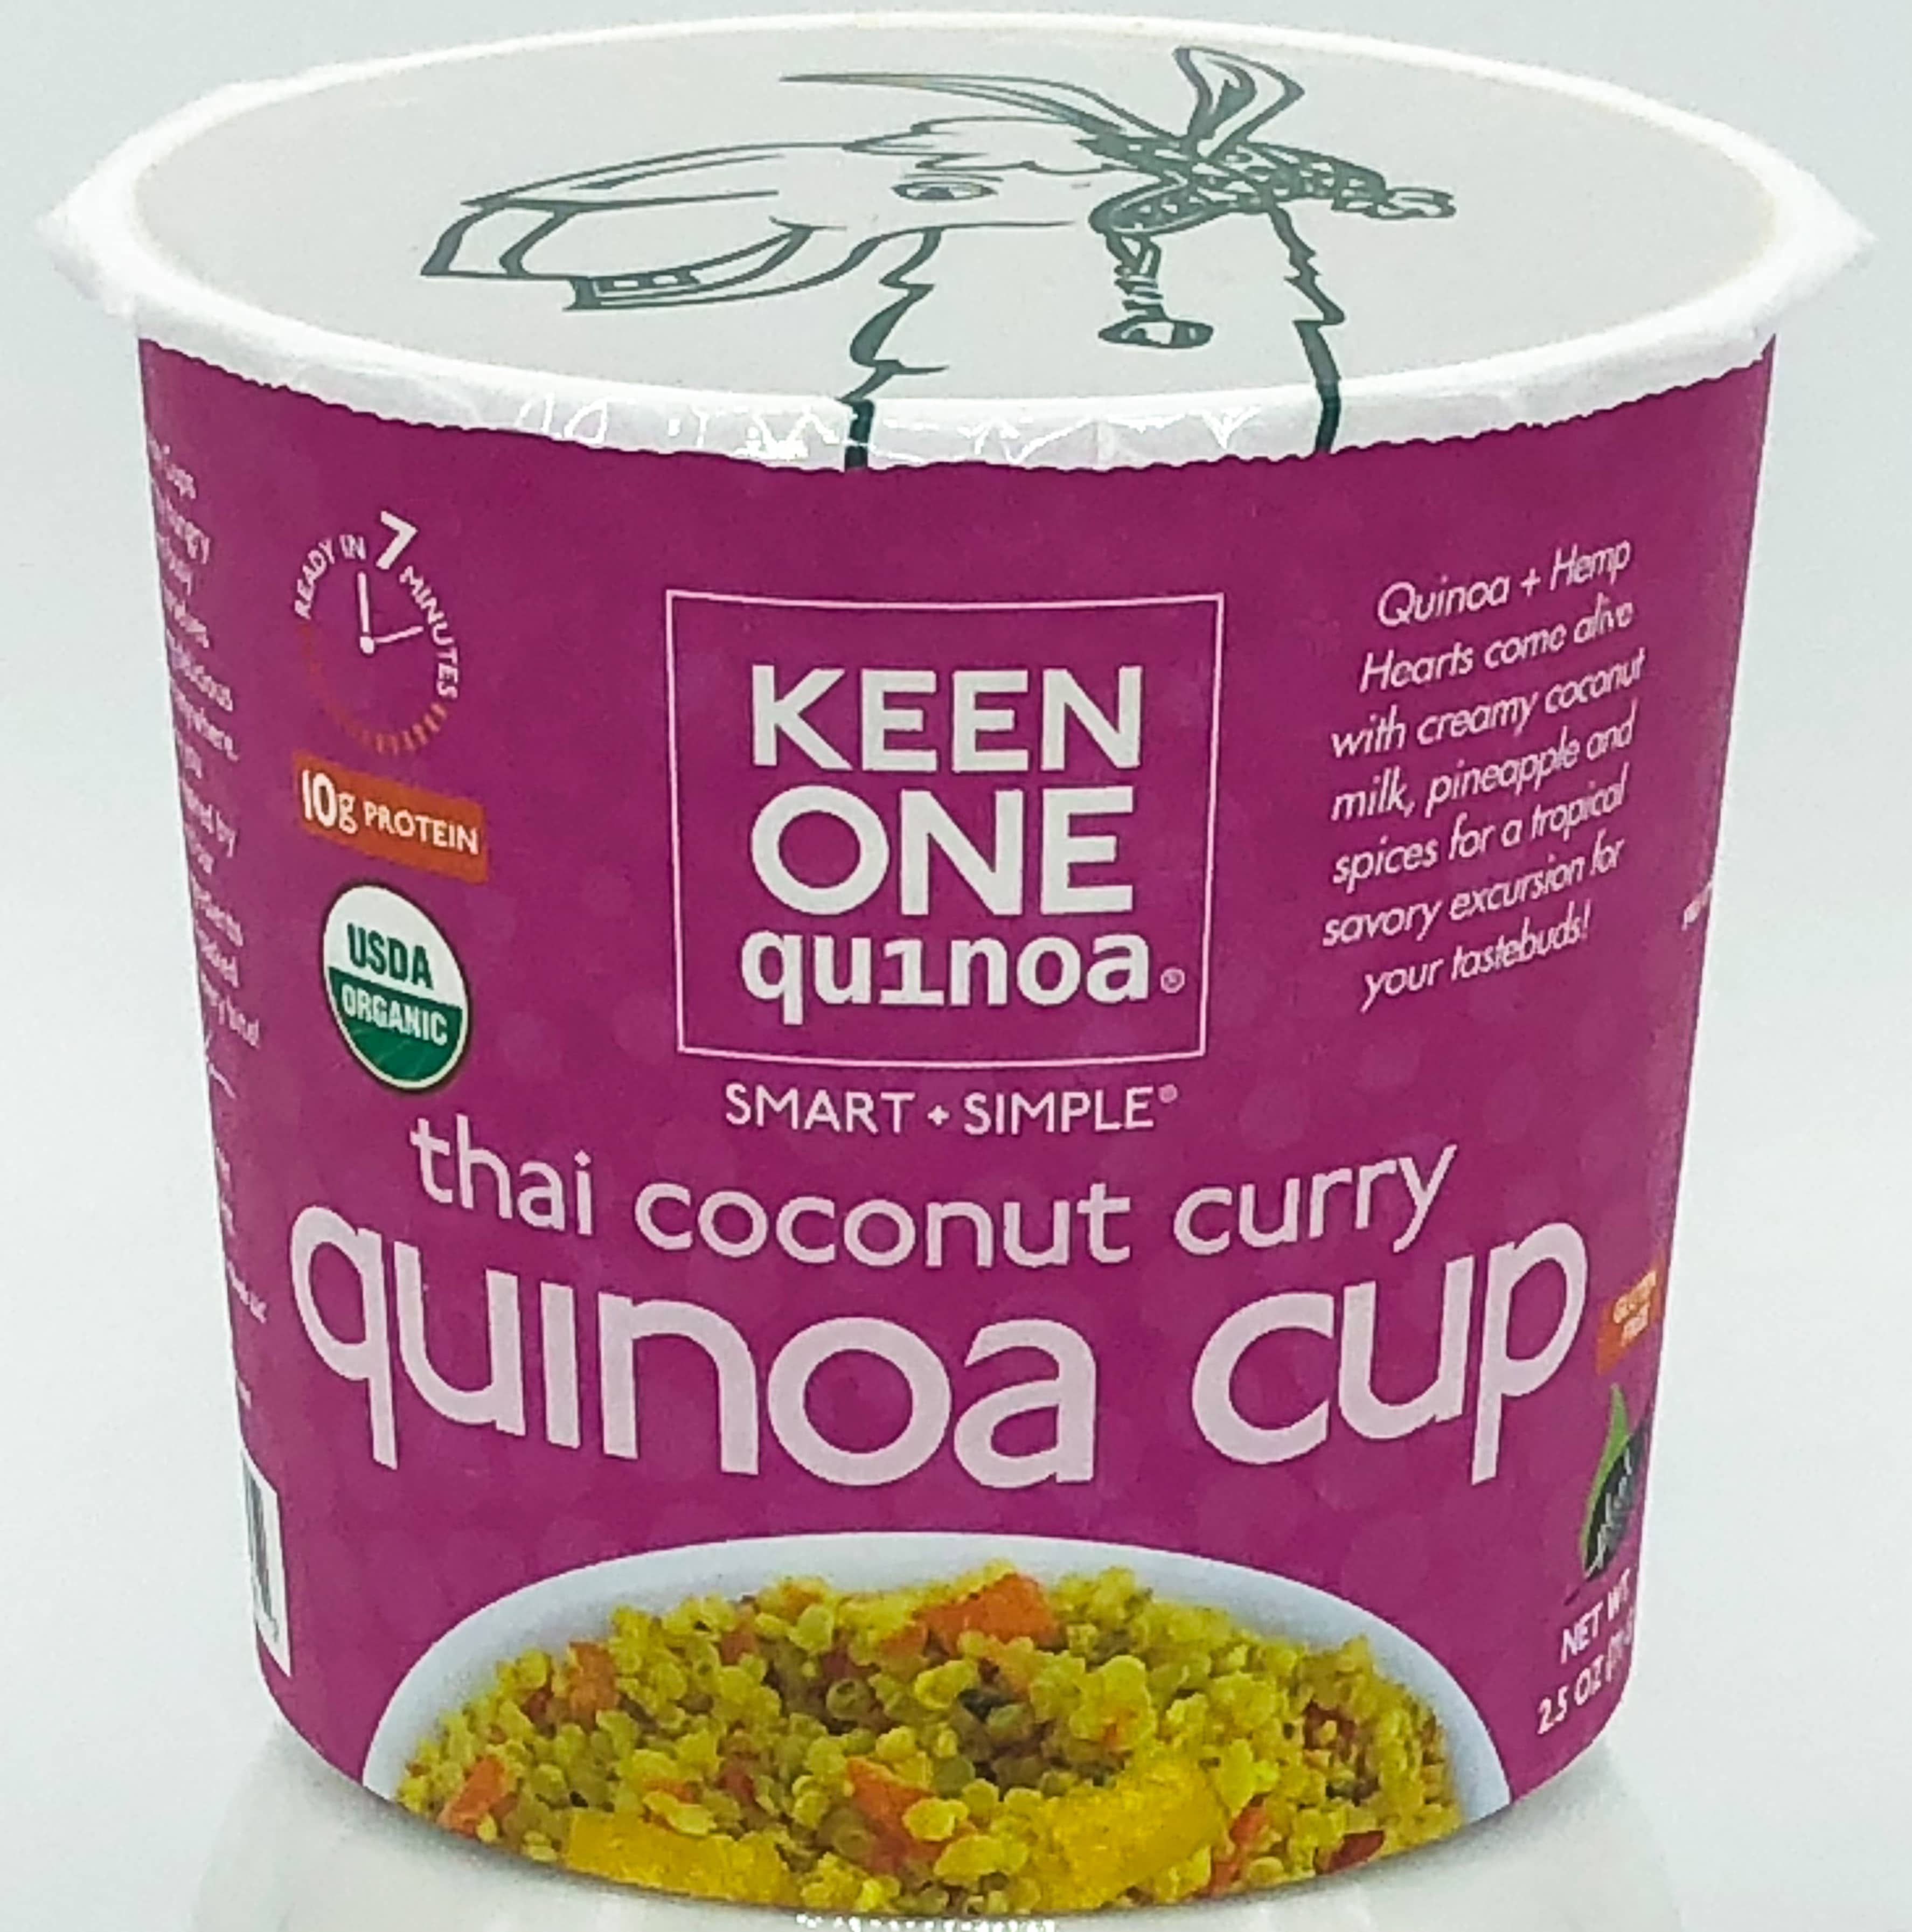 Keen One Quinoa Announces New Thai Coconut Curry Quinoa Cups | Nosh.com